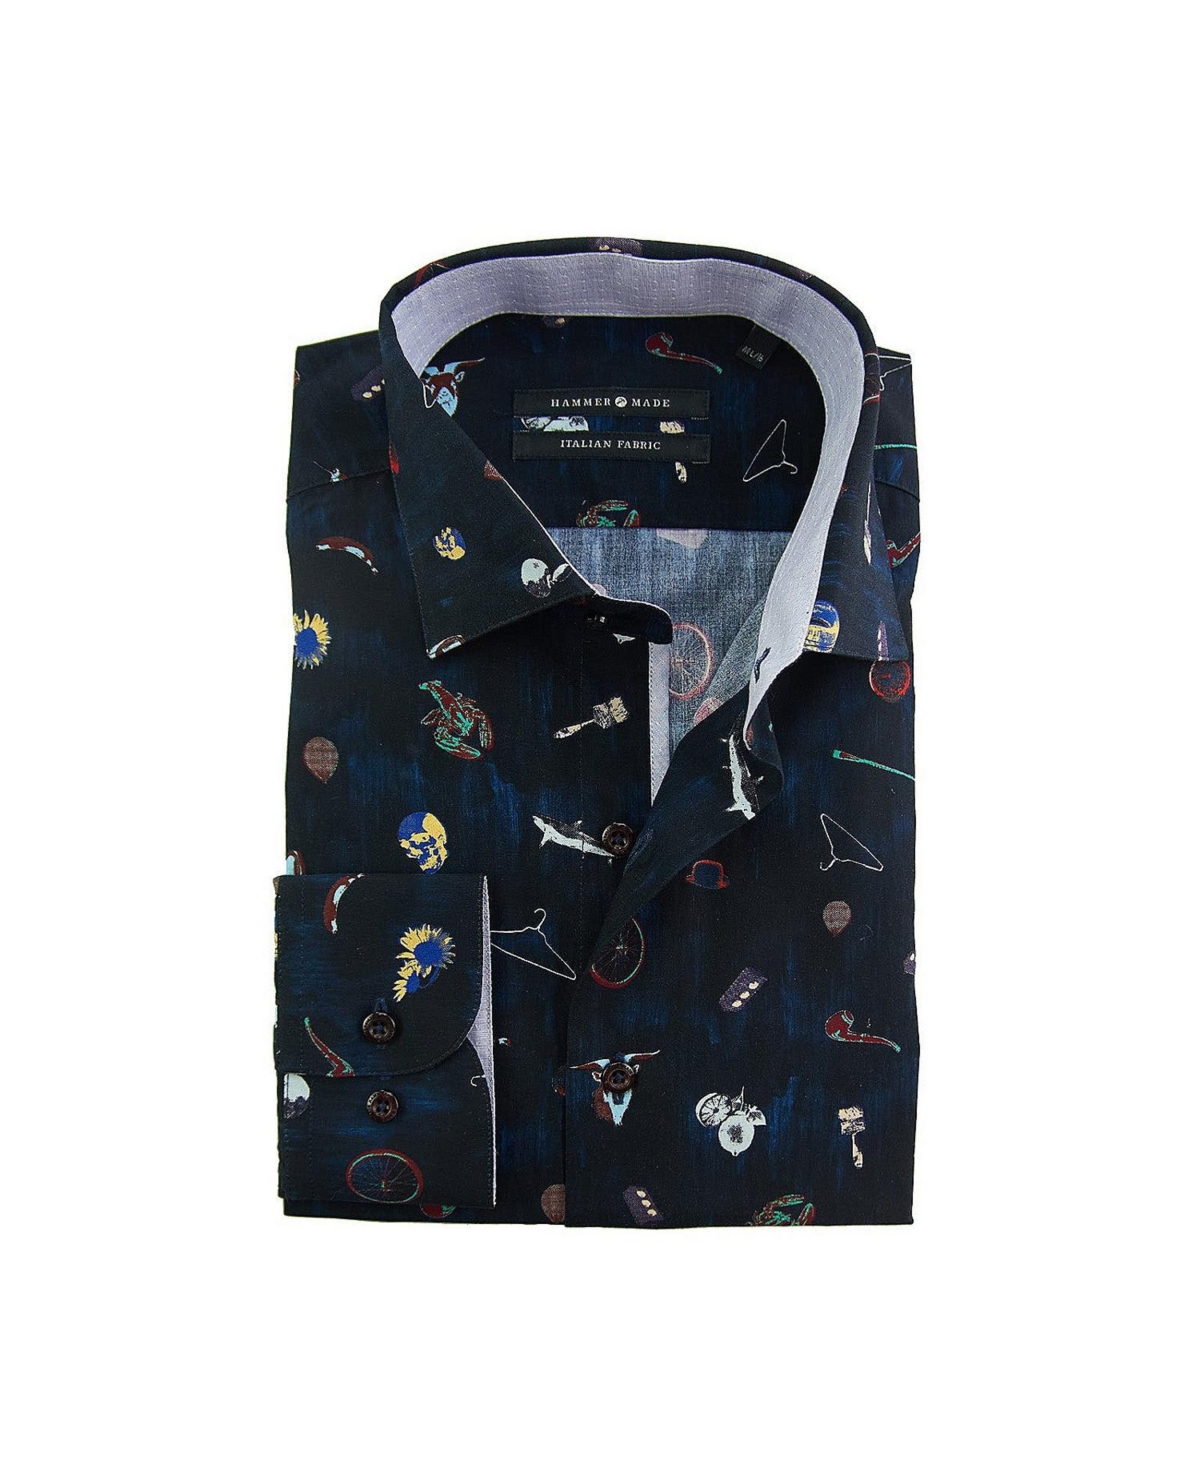 - Men's Cotton Multicolor Print Dress Shirt with Spread Collar - Navy